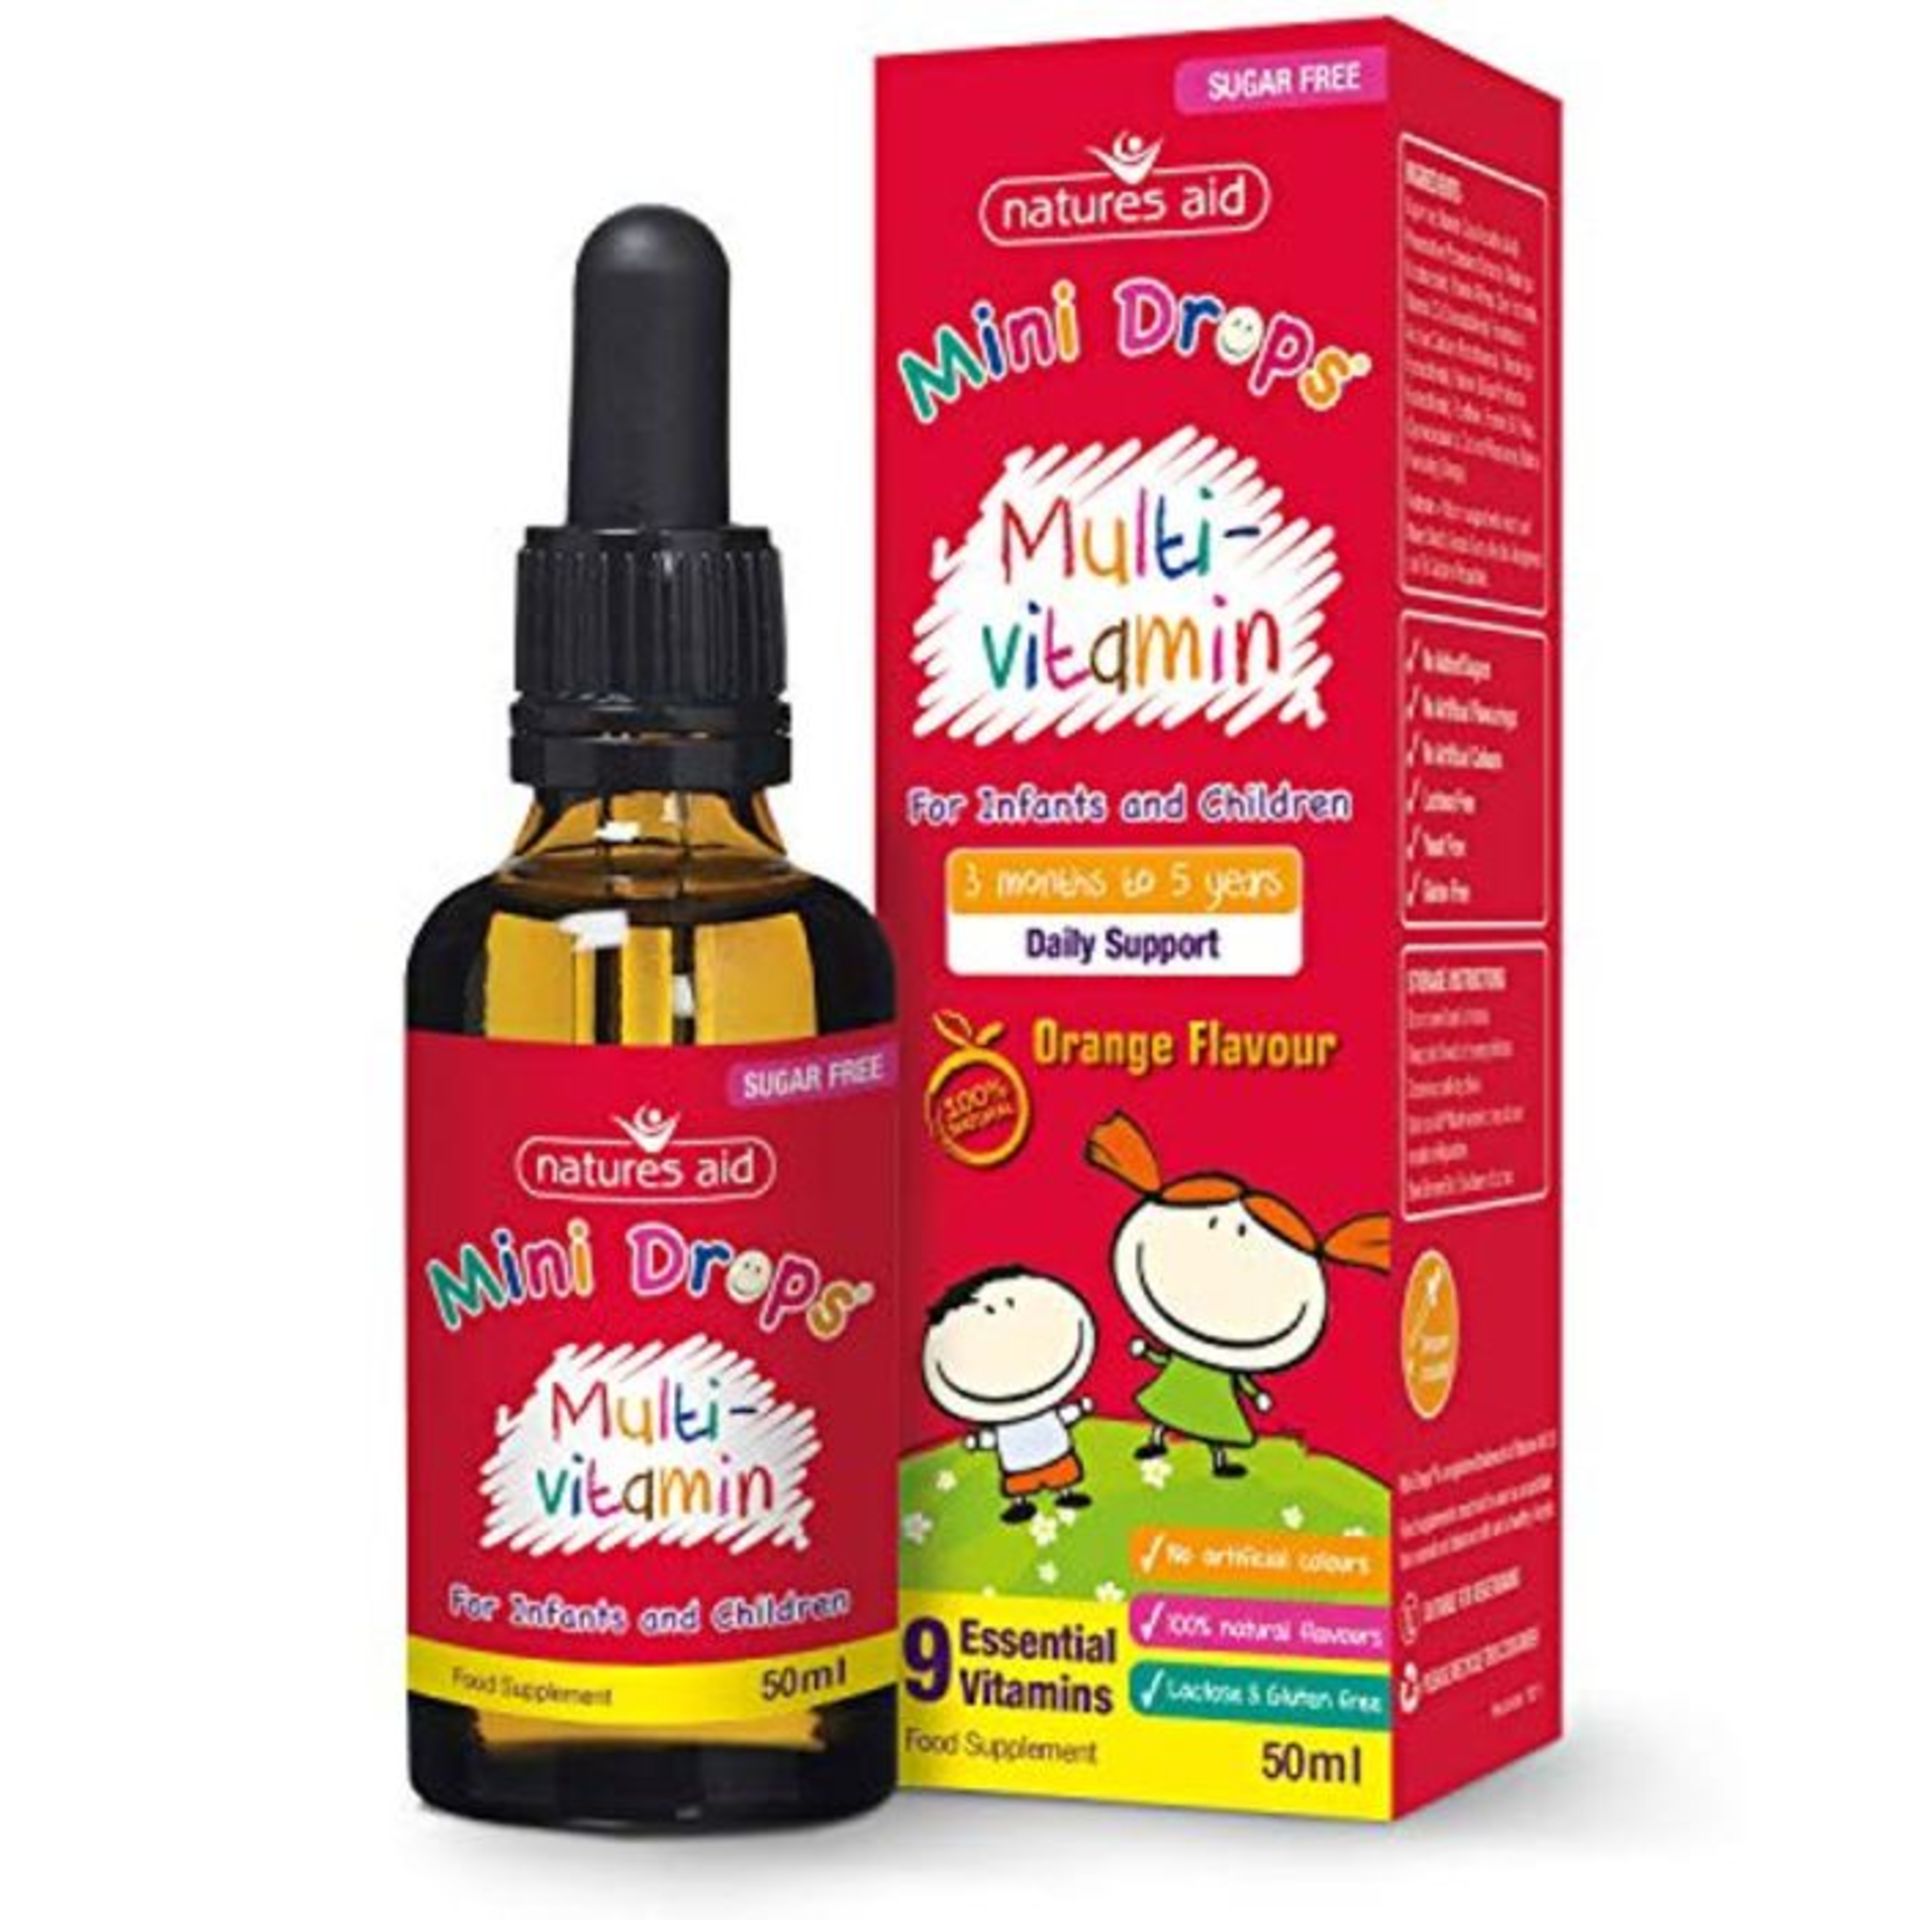 Natures Aid Mini Drops Multi-vitamin for Infants and Children, Sugar Free, 50 ml